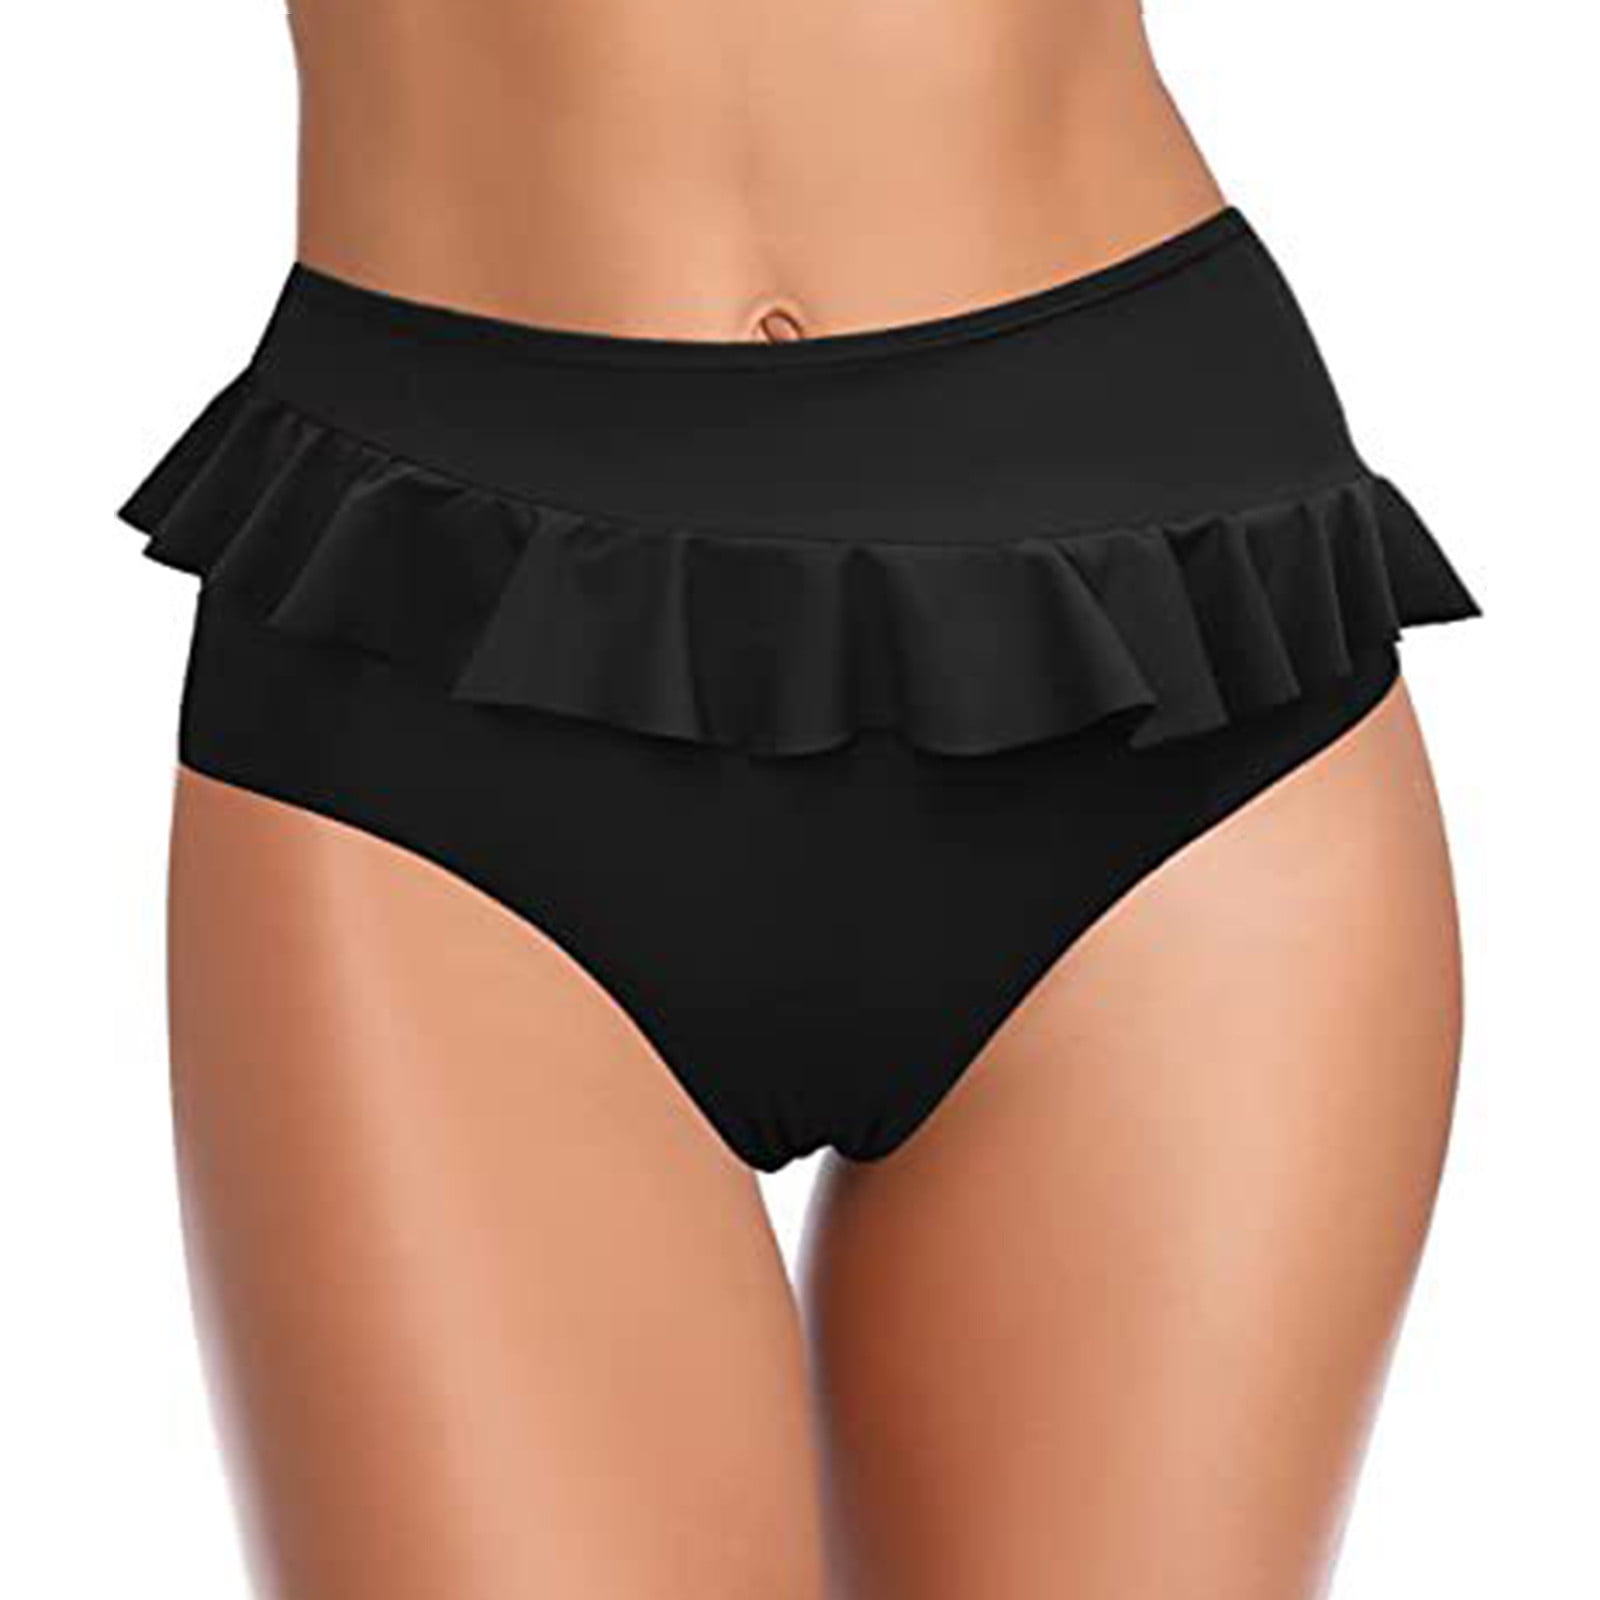 Aayomet Women High Waisted Bikini Bottoms High Cut Swim Bottom Full  Coverage Swimsuit Bottom Bathing Suit Shirt And Shorts,Black S